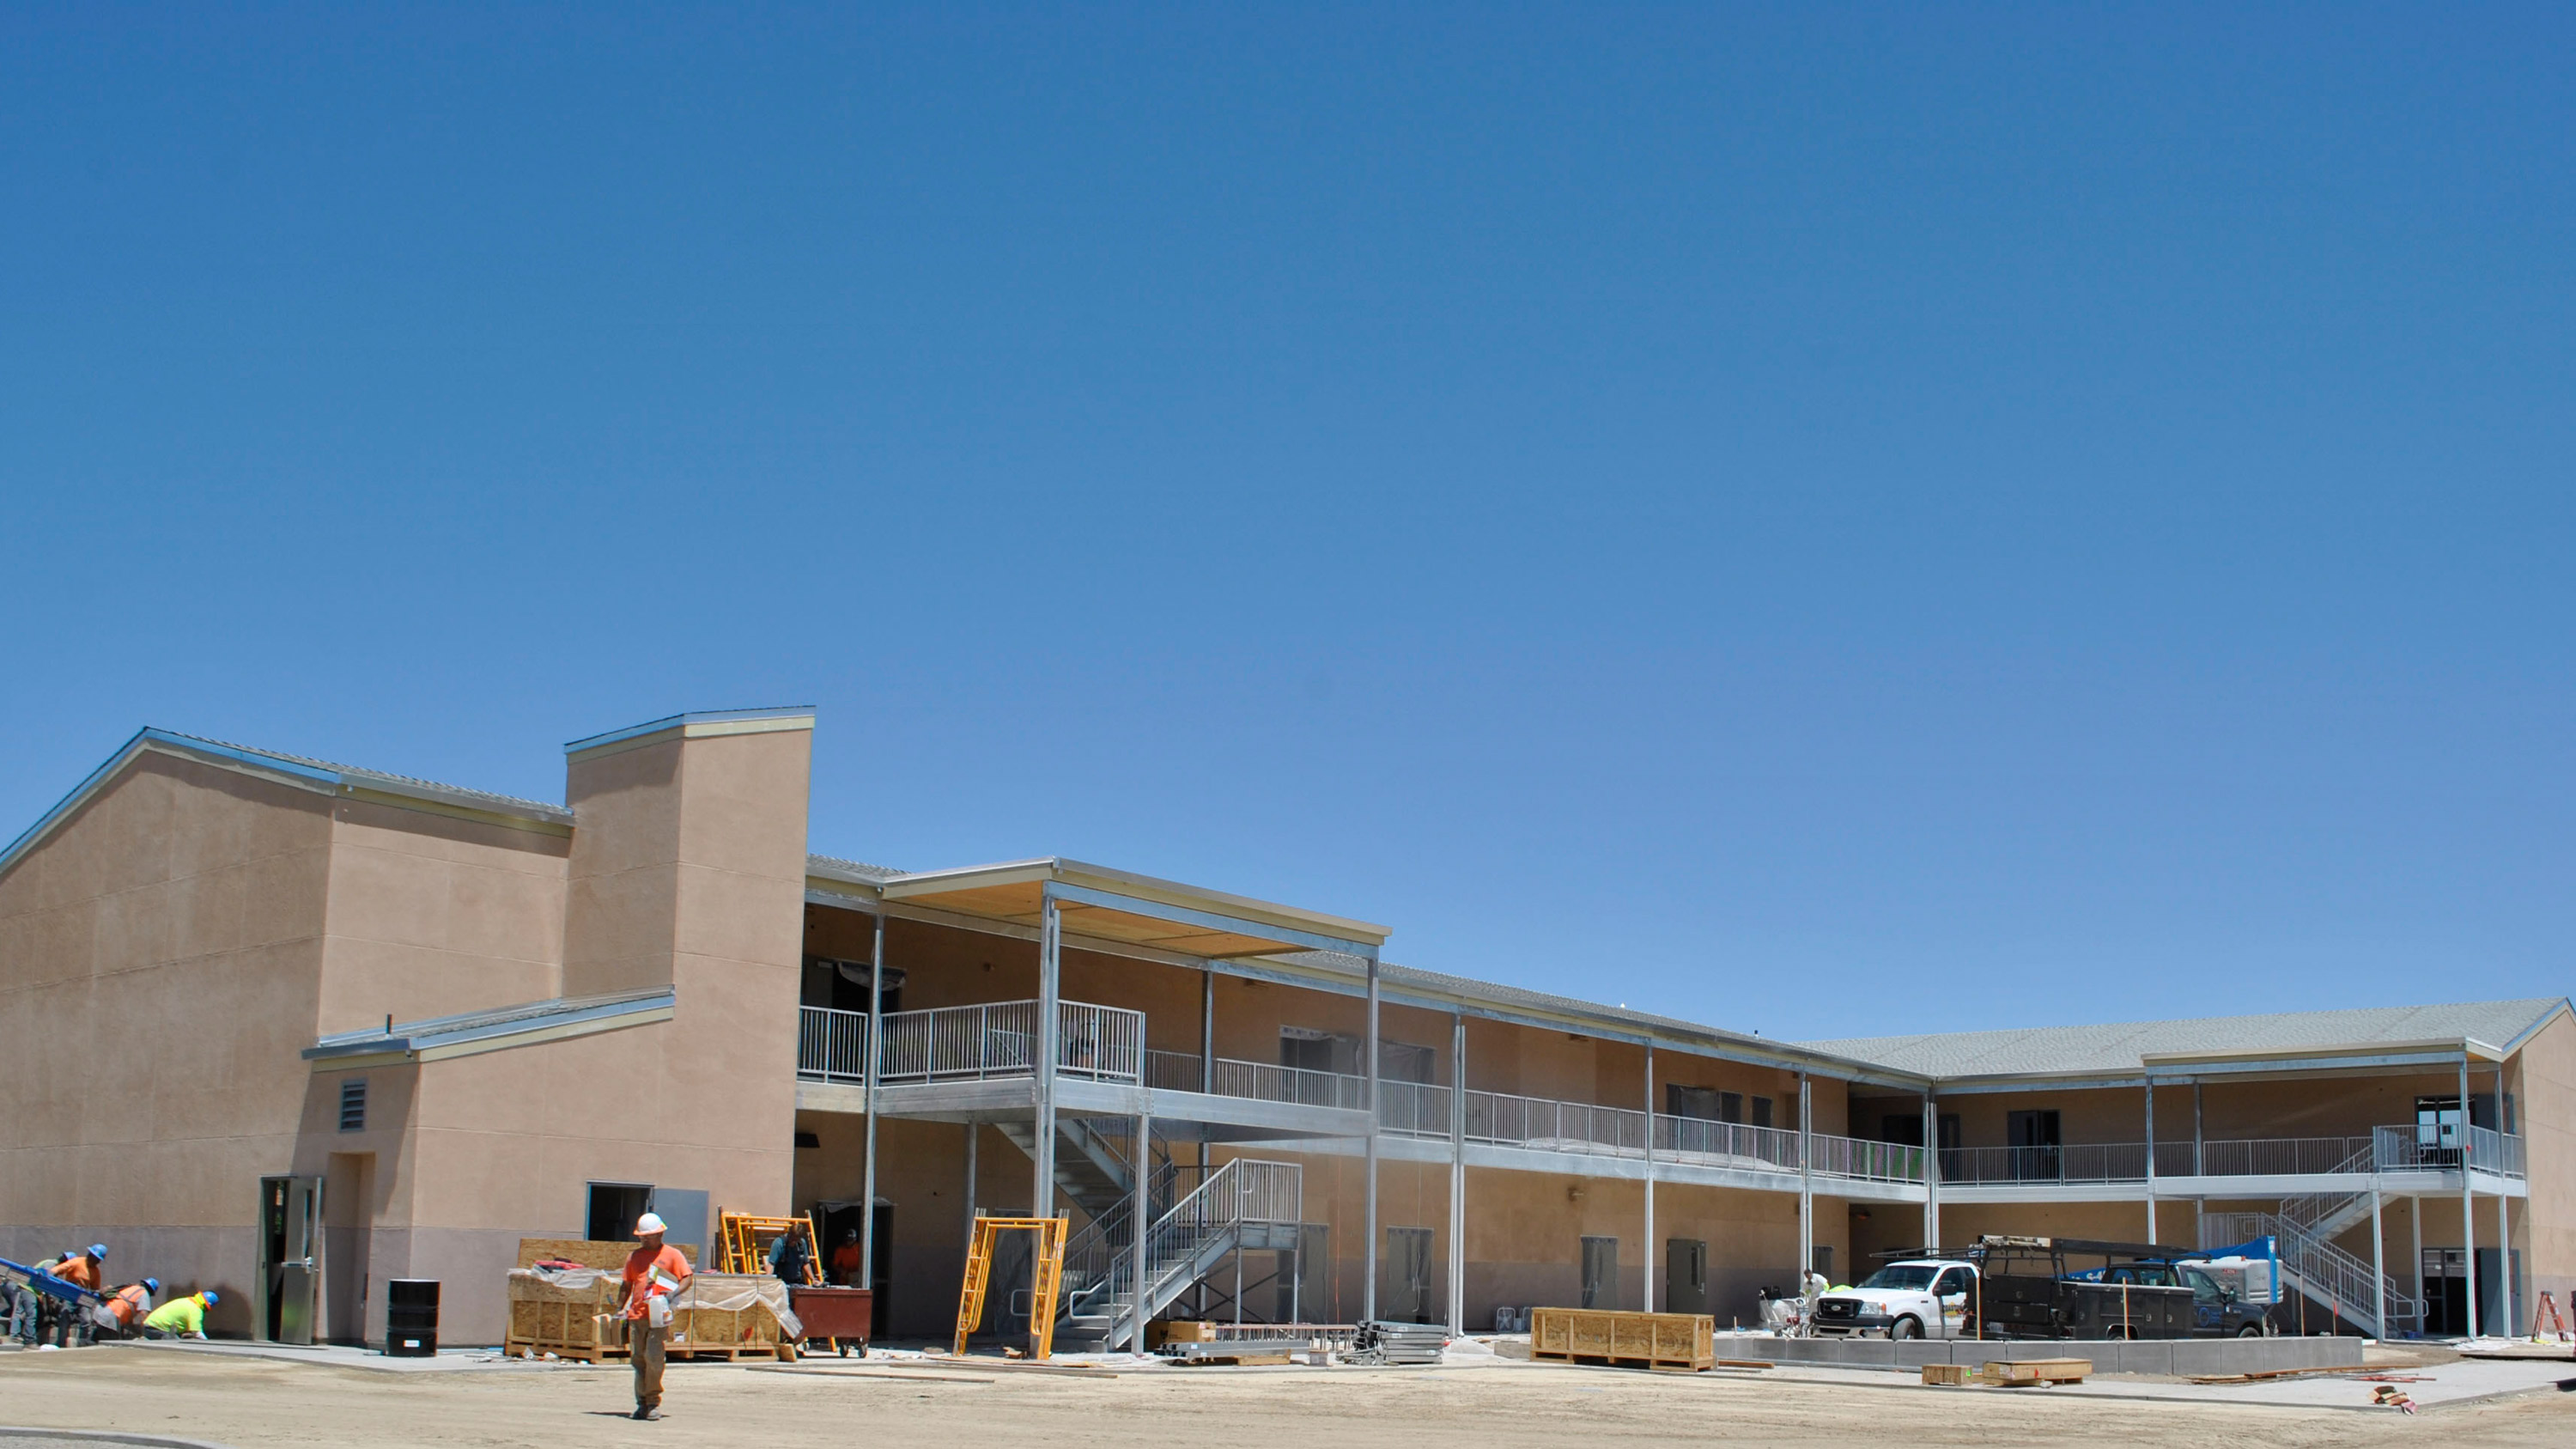 Fremont Elementary School in Salinas, CA - Exterior Under Construction